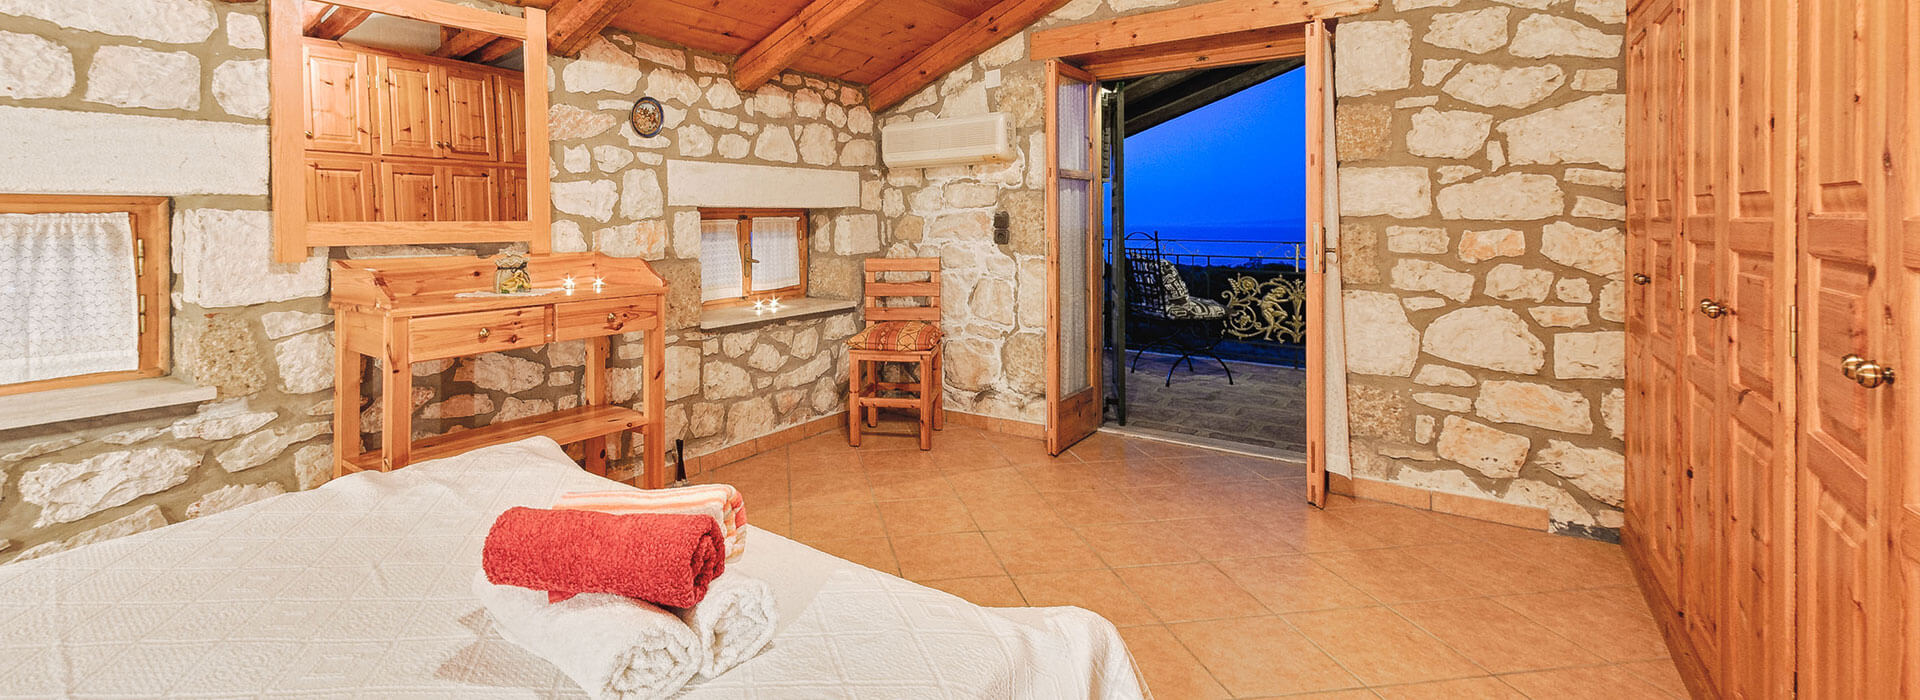 deluxe three-bedroom apartment - joanna's traditional stone villas - vasilikos zante zakynthos greece